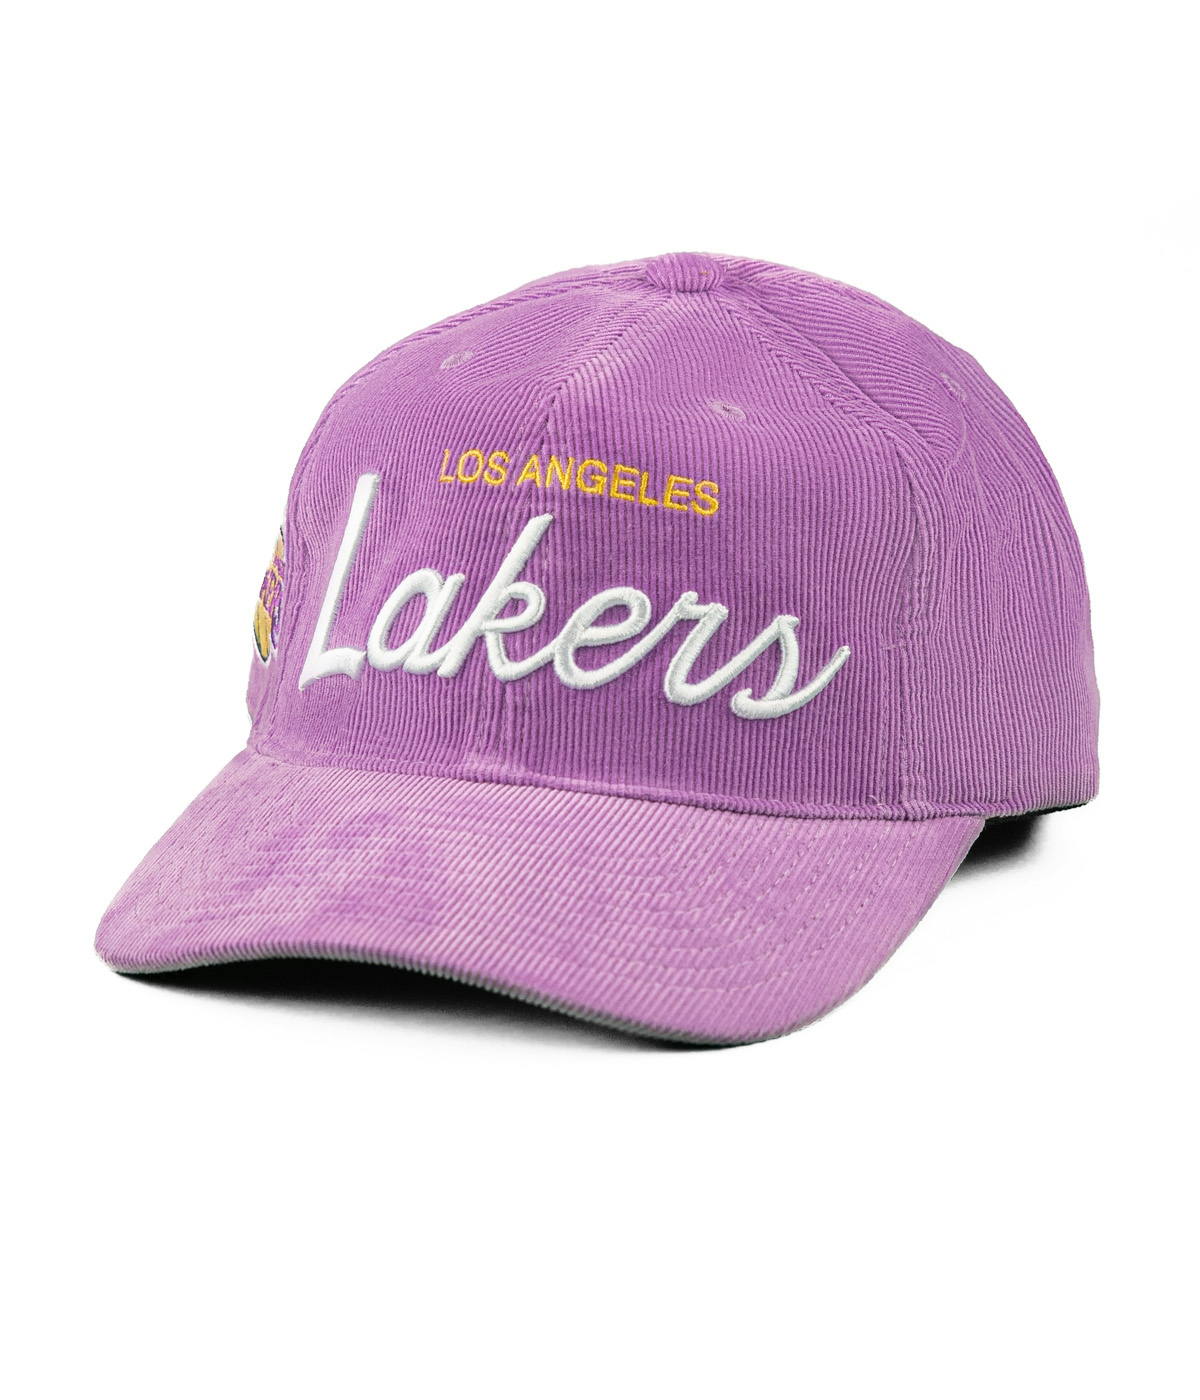 Mitchell & Ness Montage Cord Snapback - Los Angeles Laker Cap Purple 1